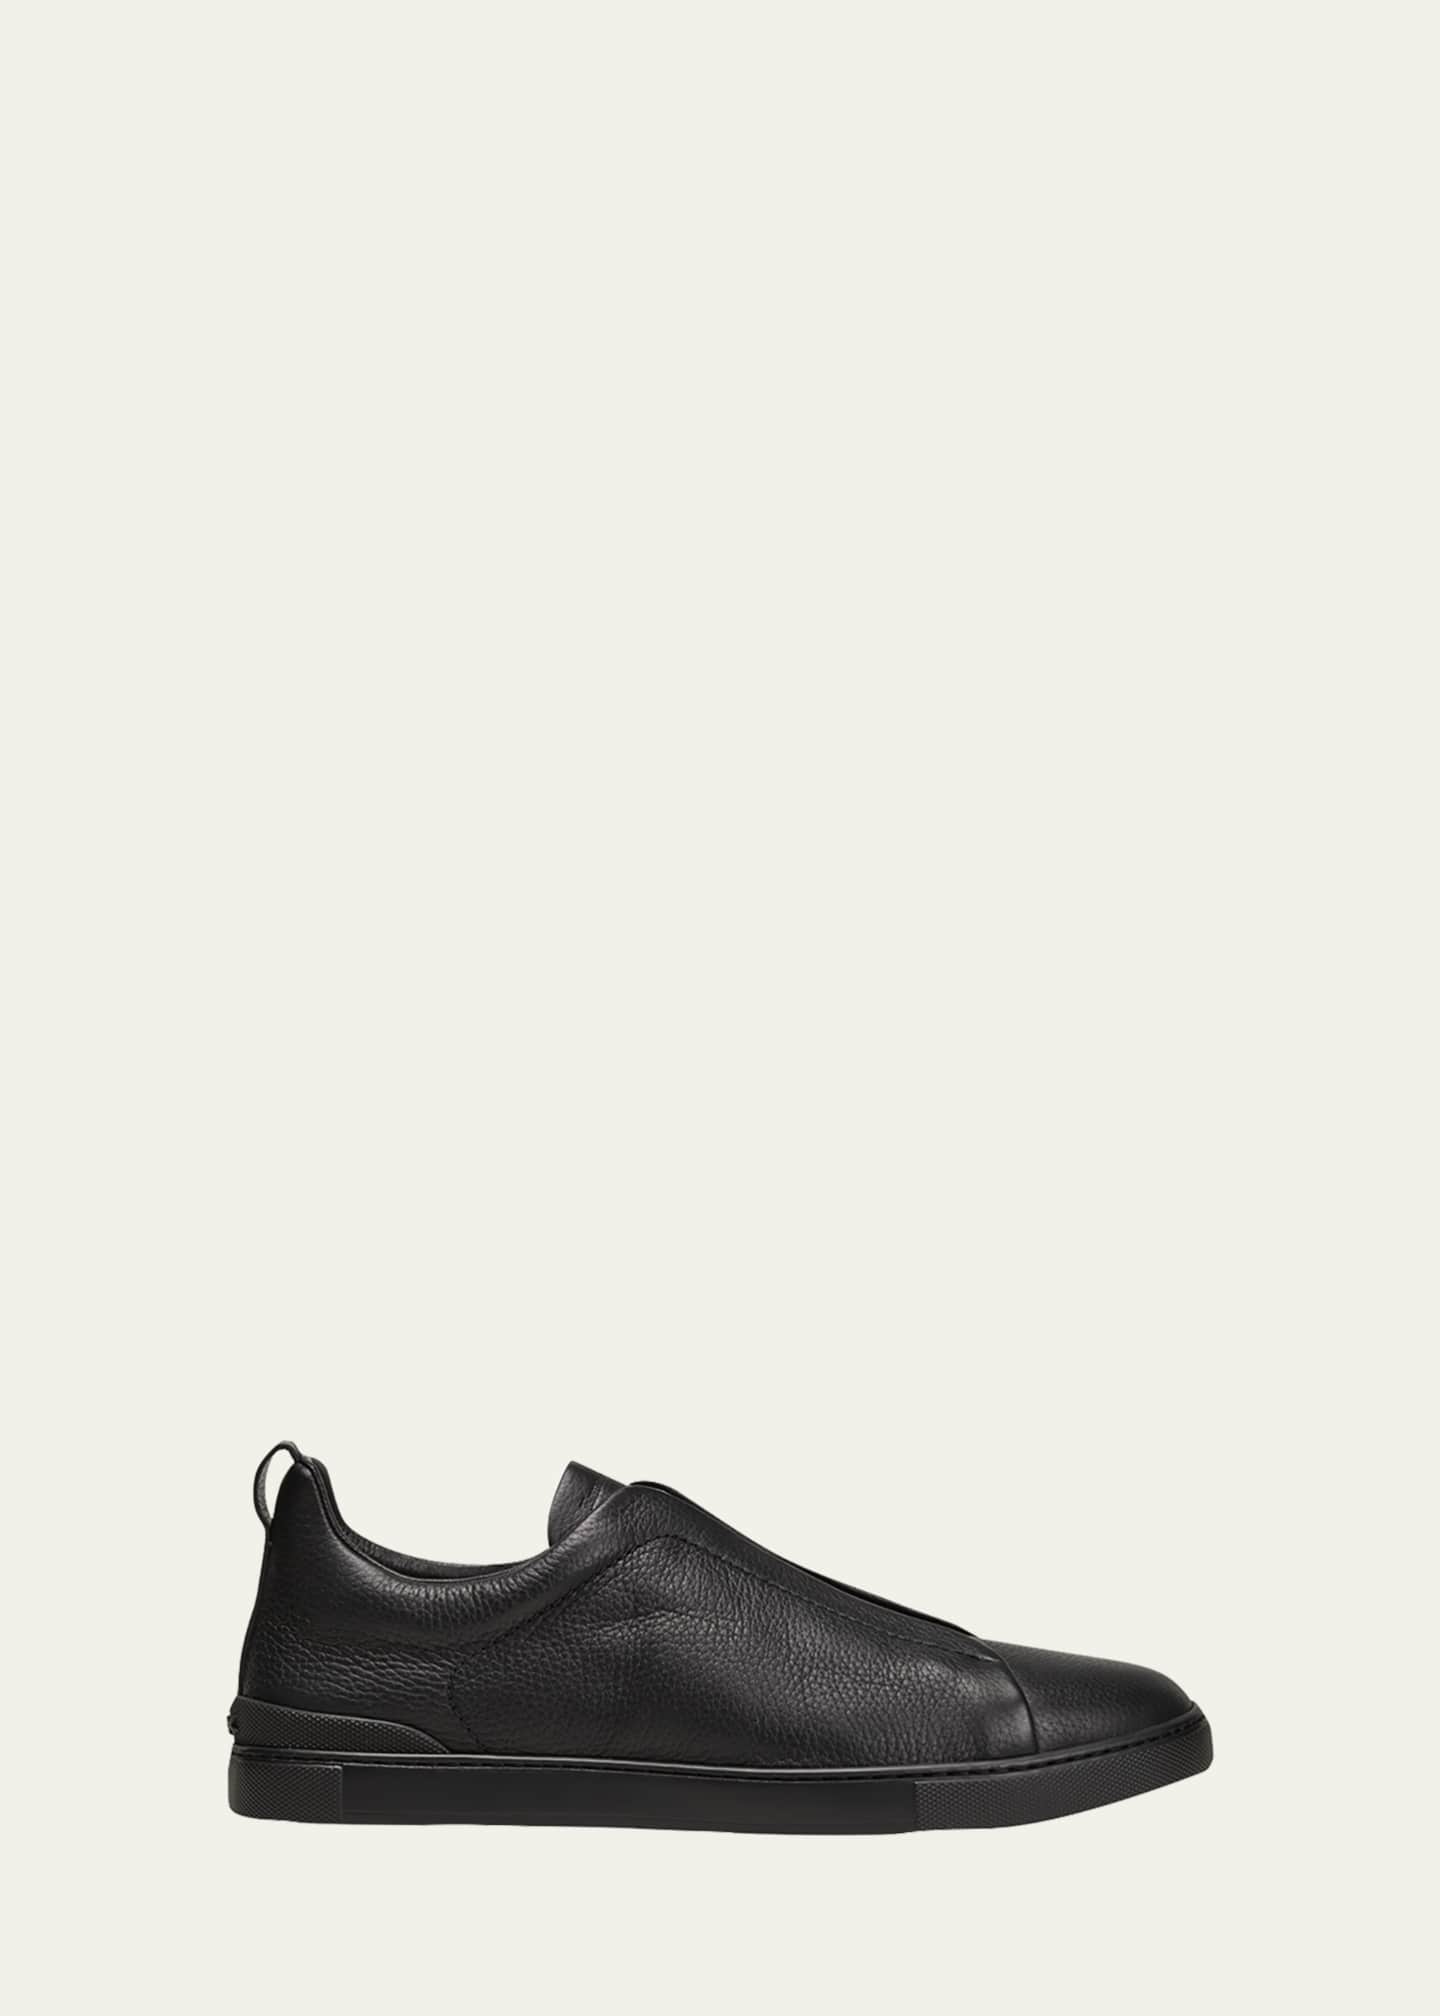 ZEGNA Men's Triple-Stitch Leather Sneakers